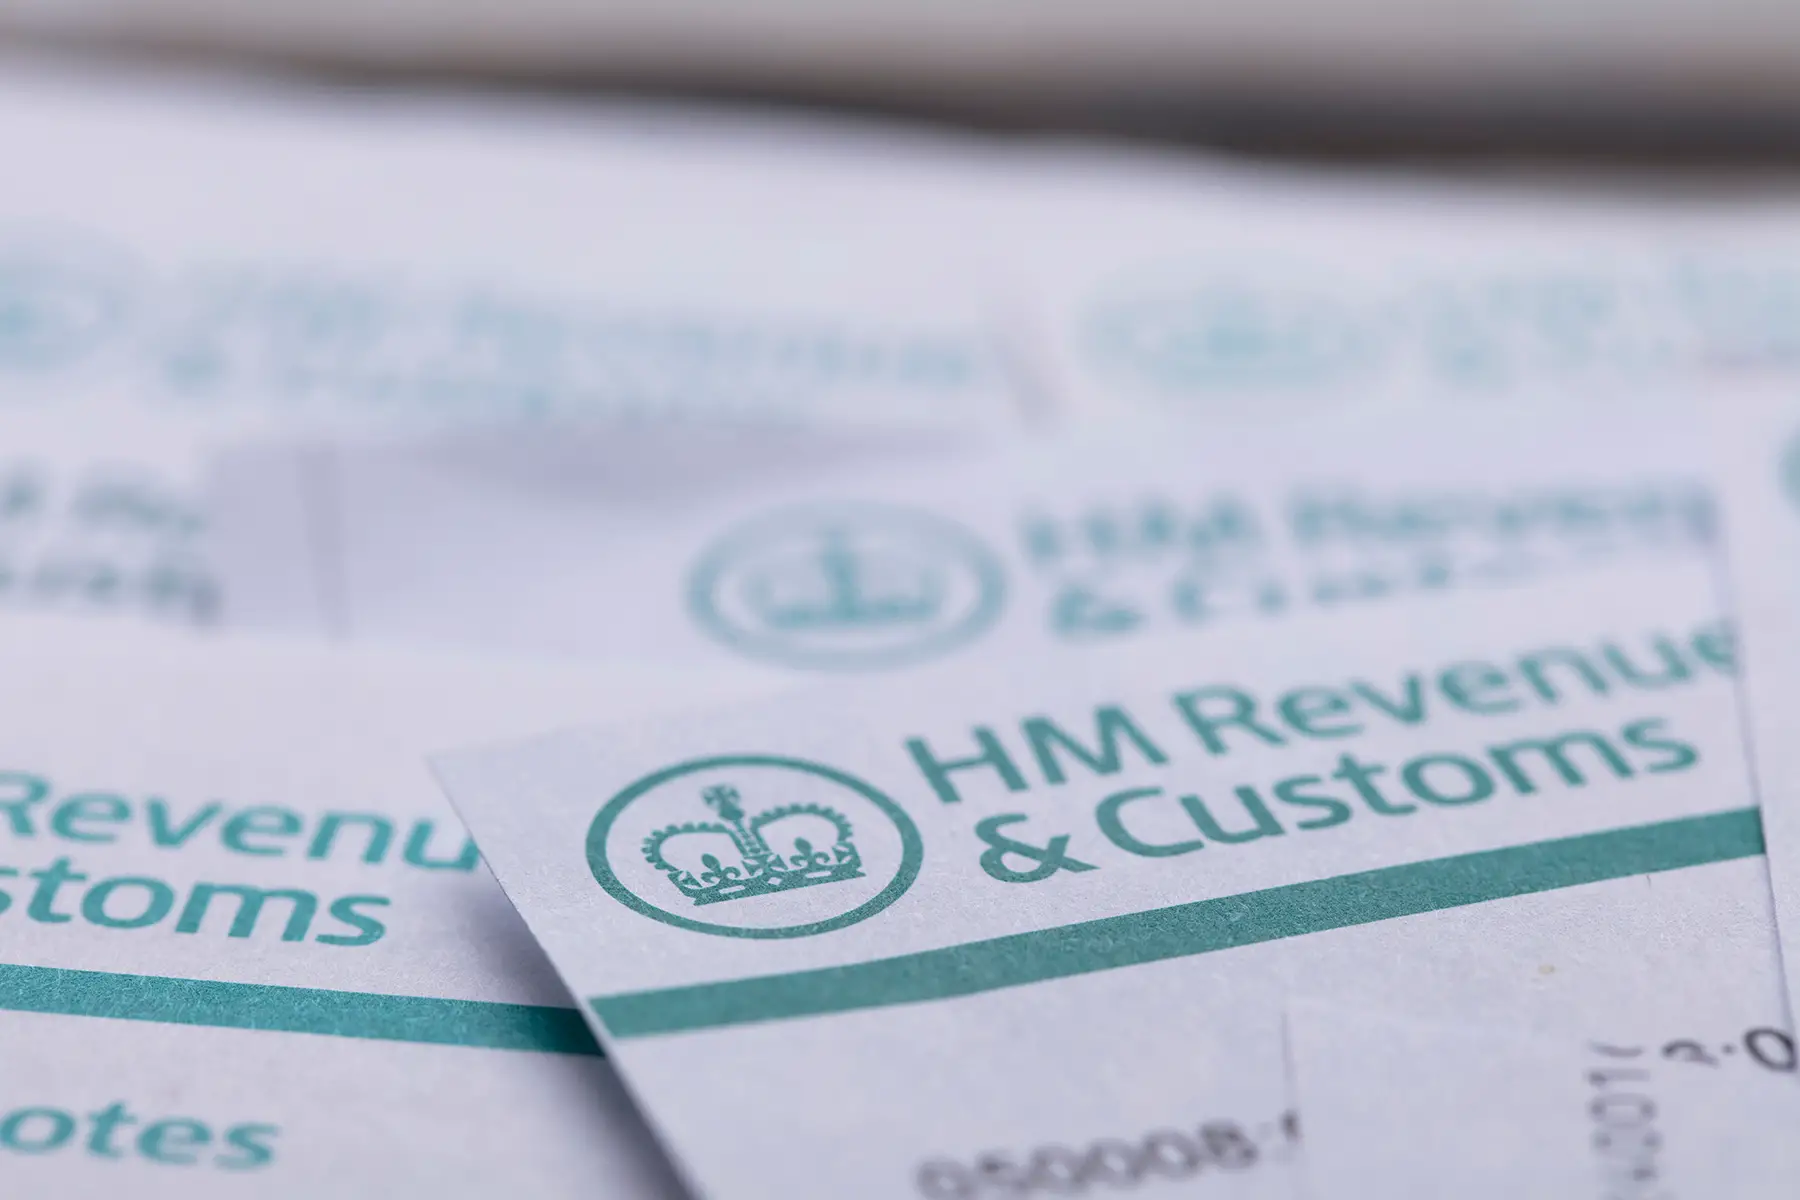 HMRC tax paperwork